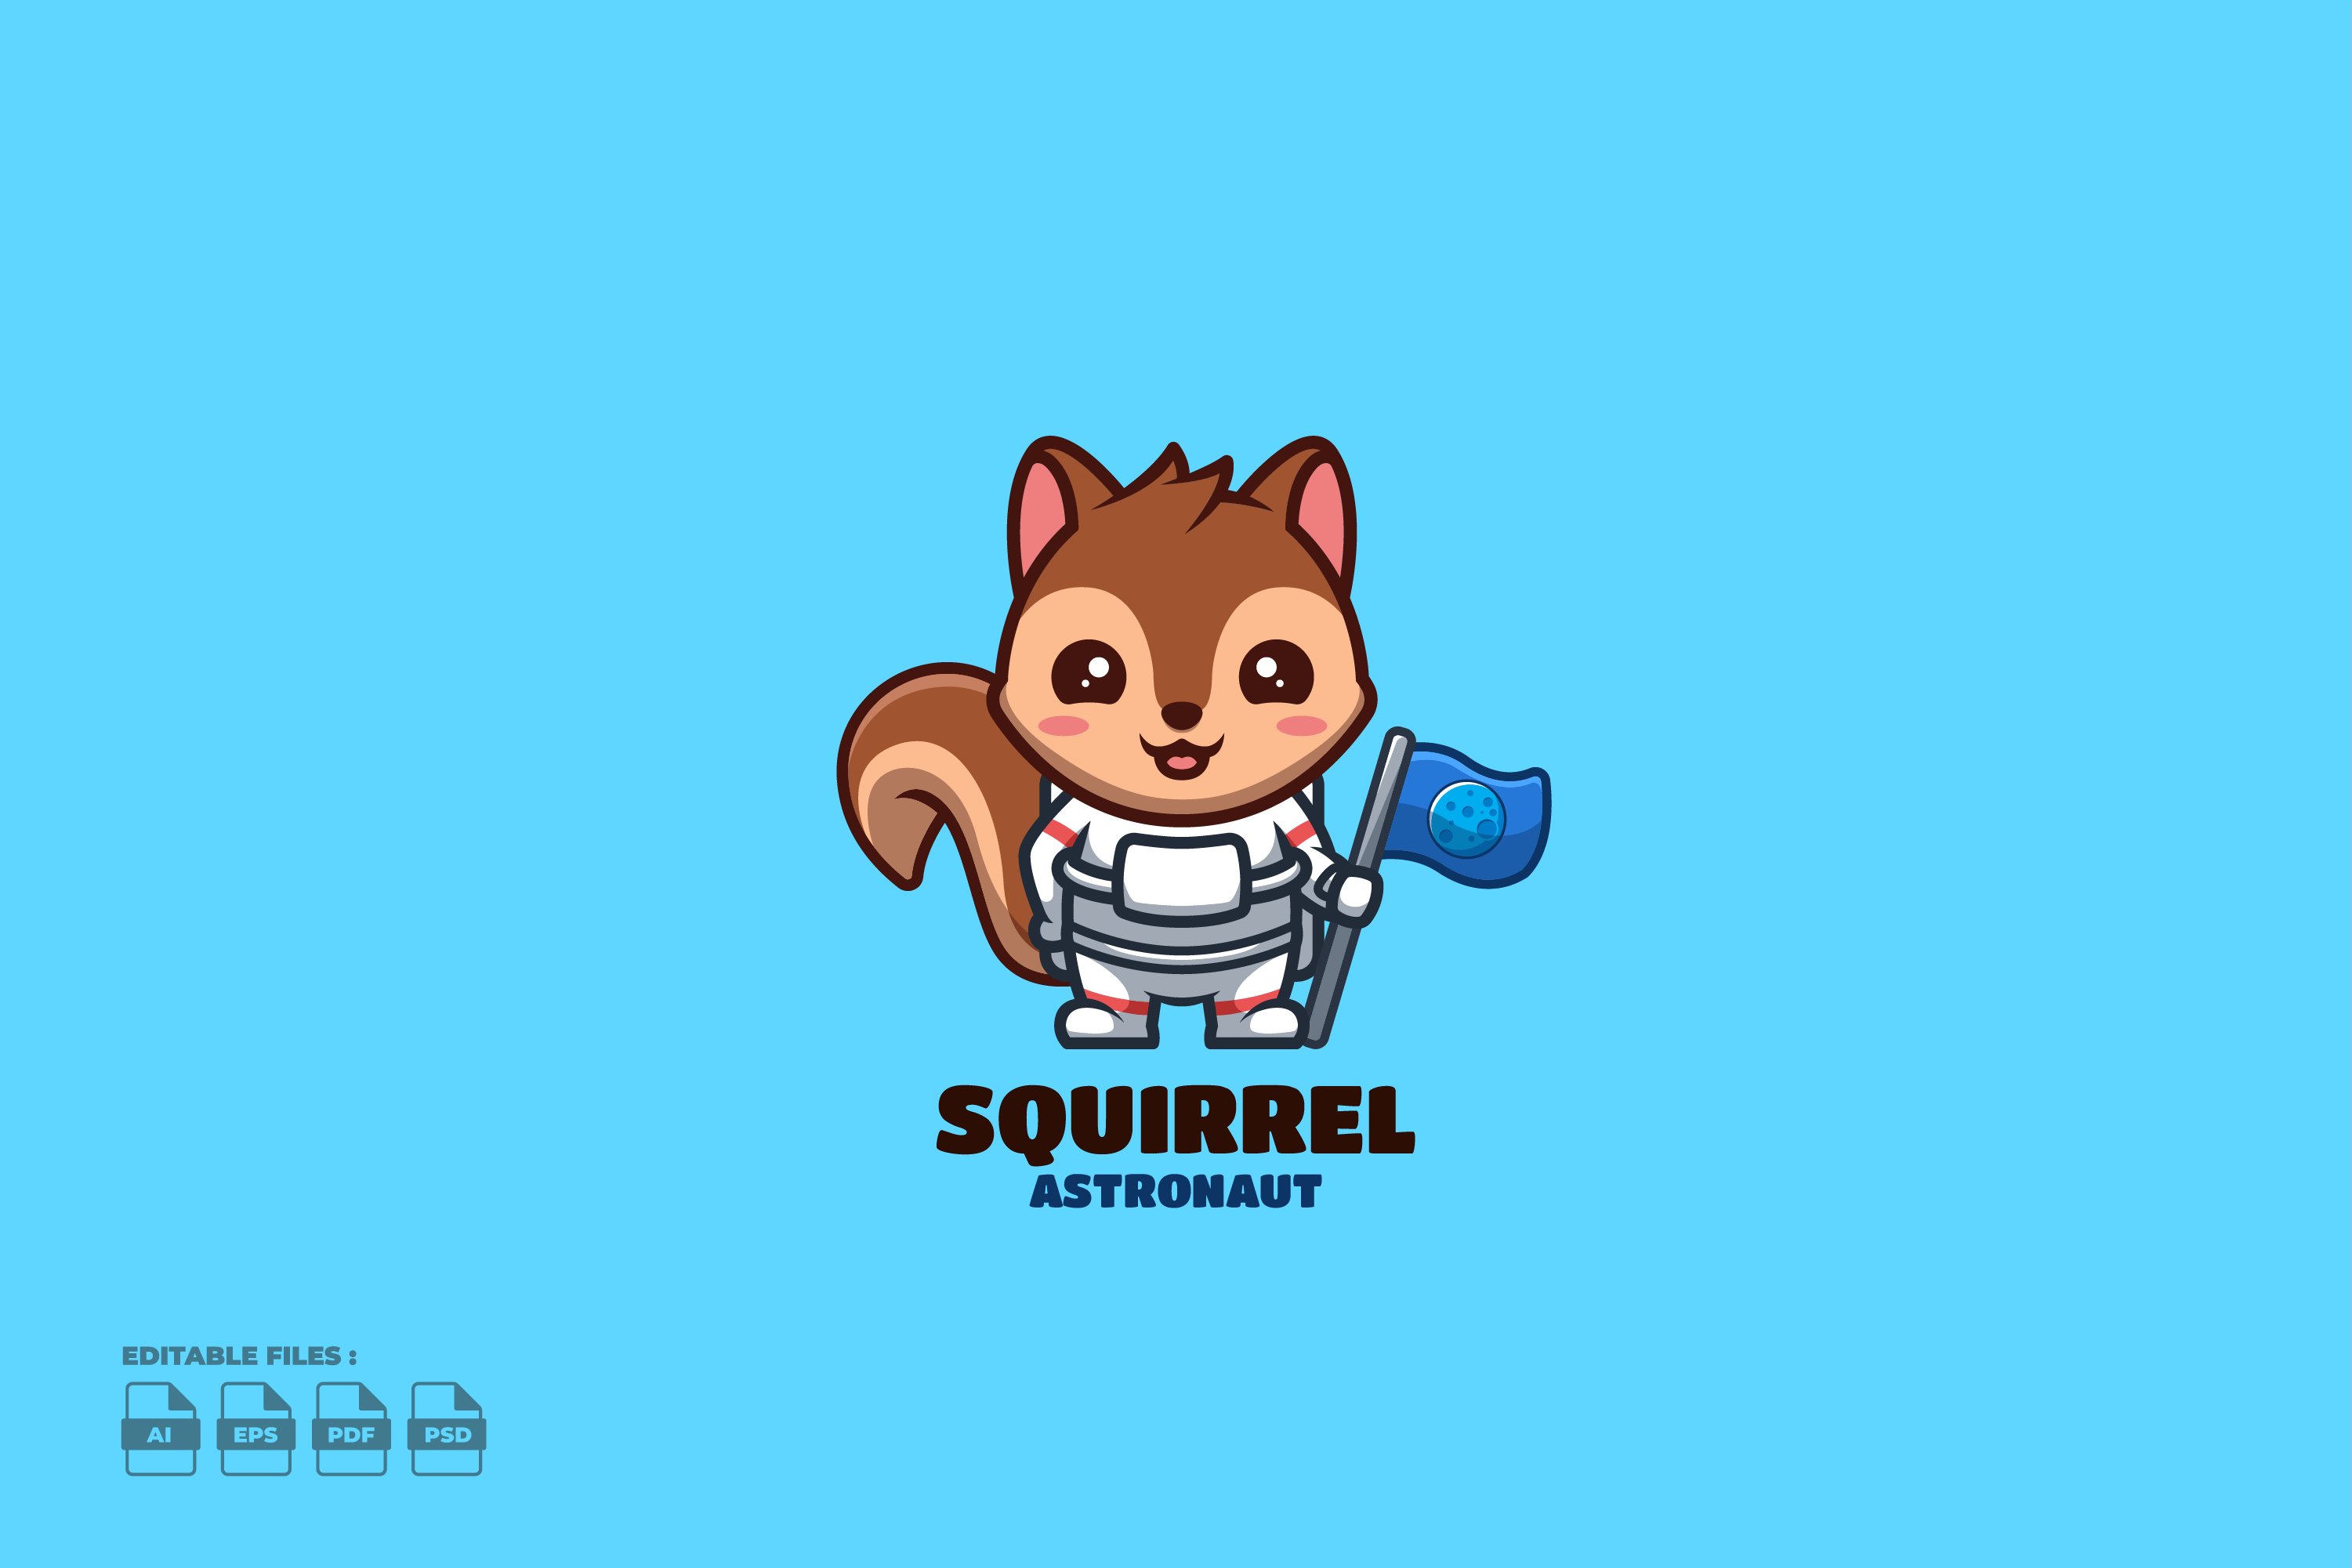 Astronaut Squirrel Cute Mascot Logo cover image.